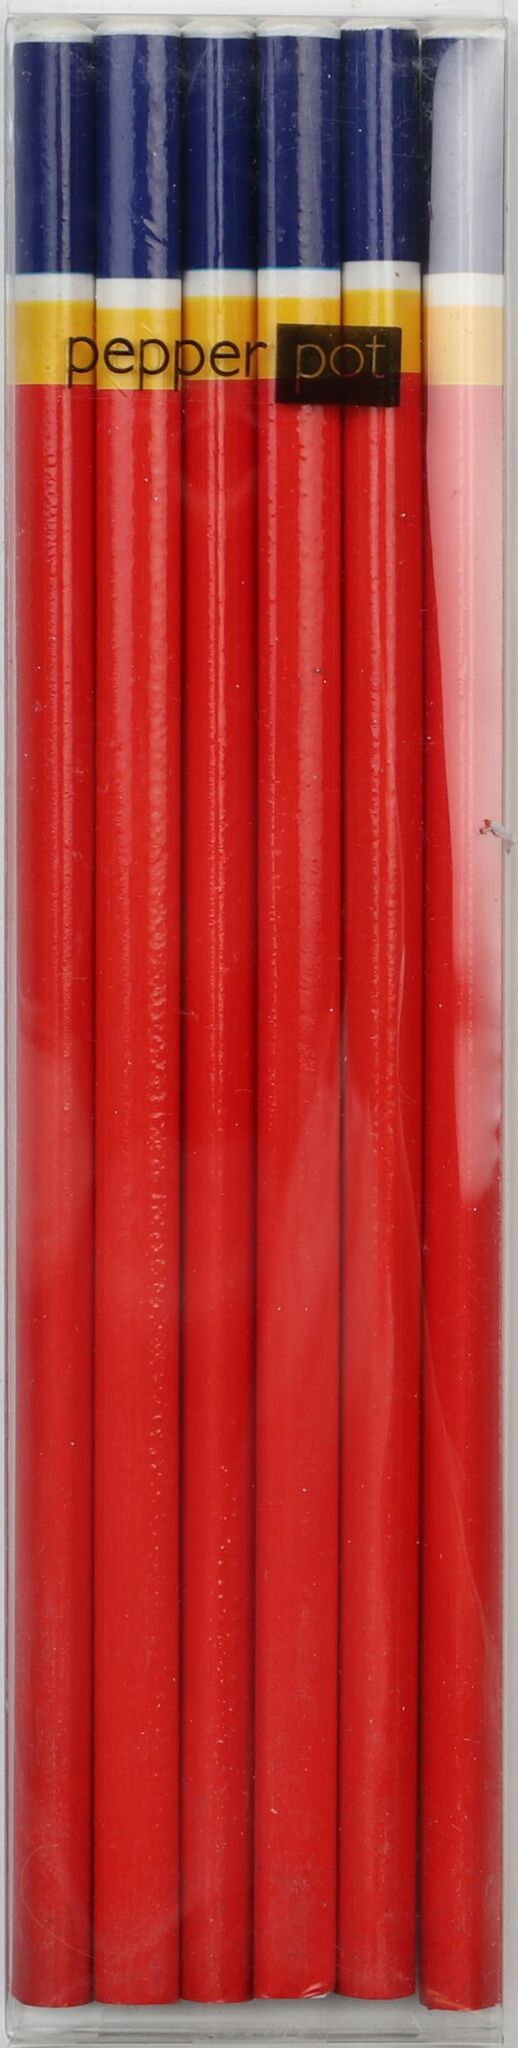 Pennset med 6 röda blyertspennor från Hedlundgruppen.